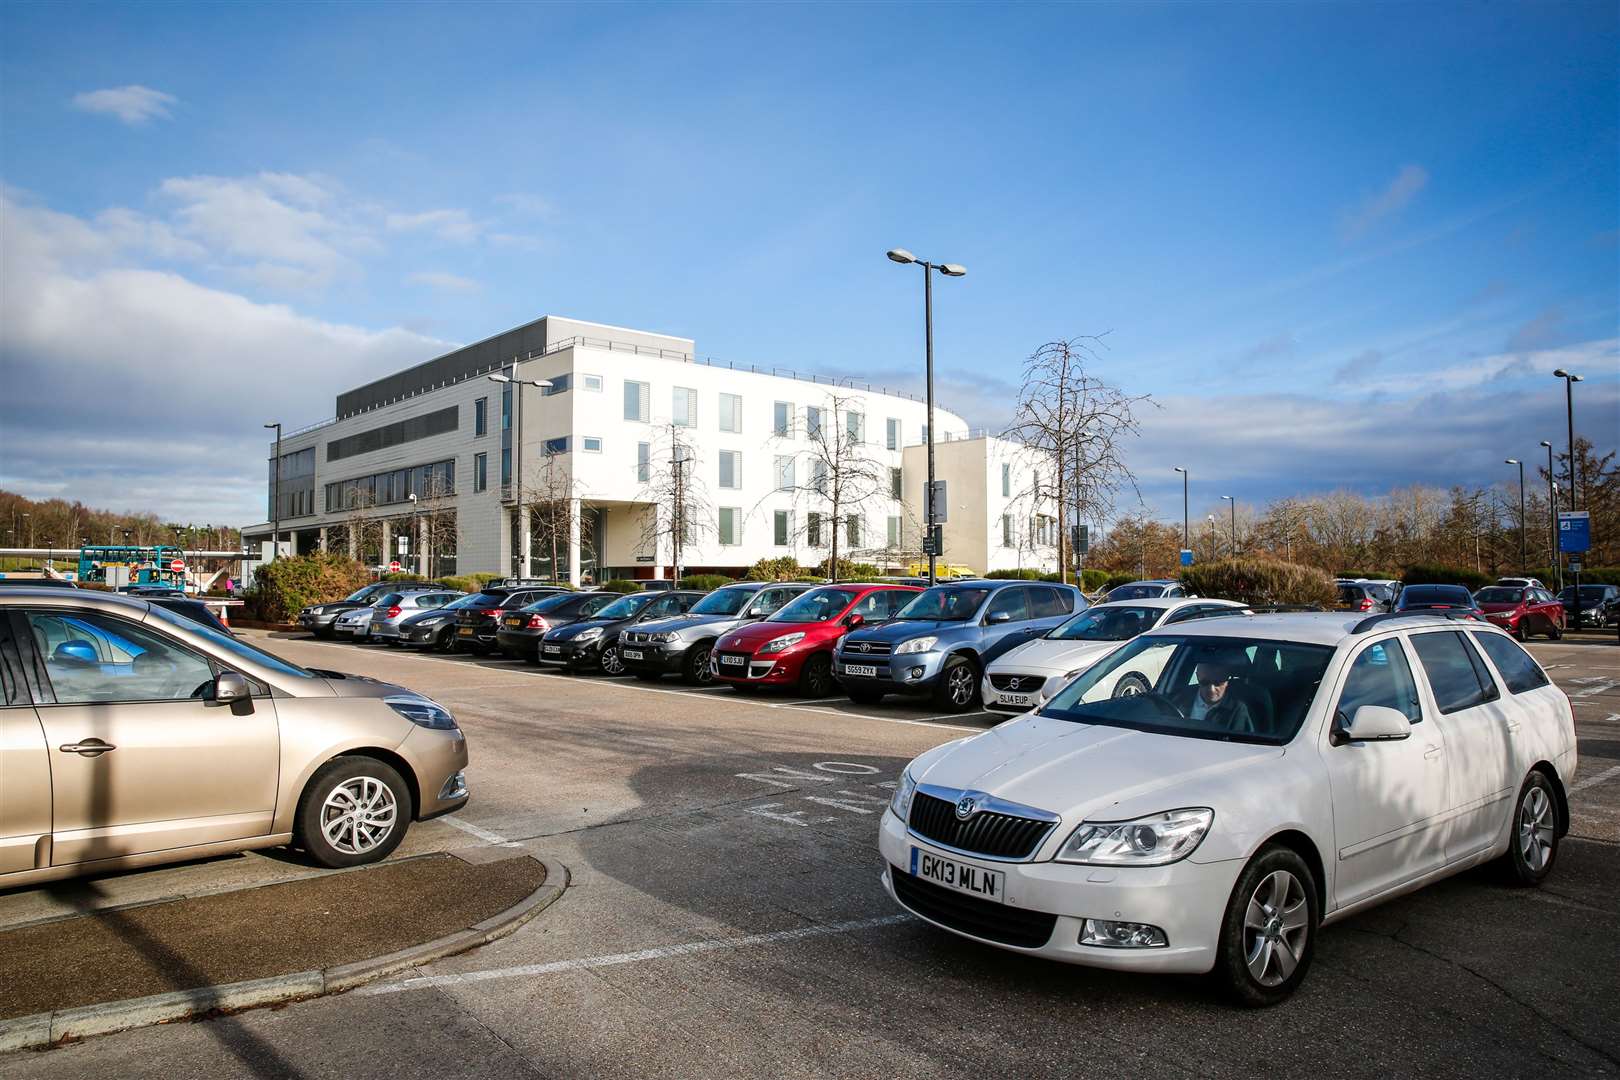 Car parks at Tunbridge Wells Hospital. Picture: Matthew Walker